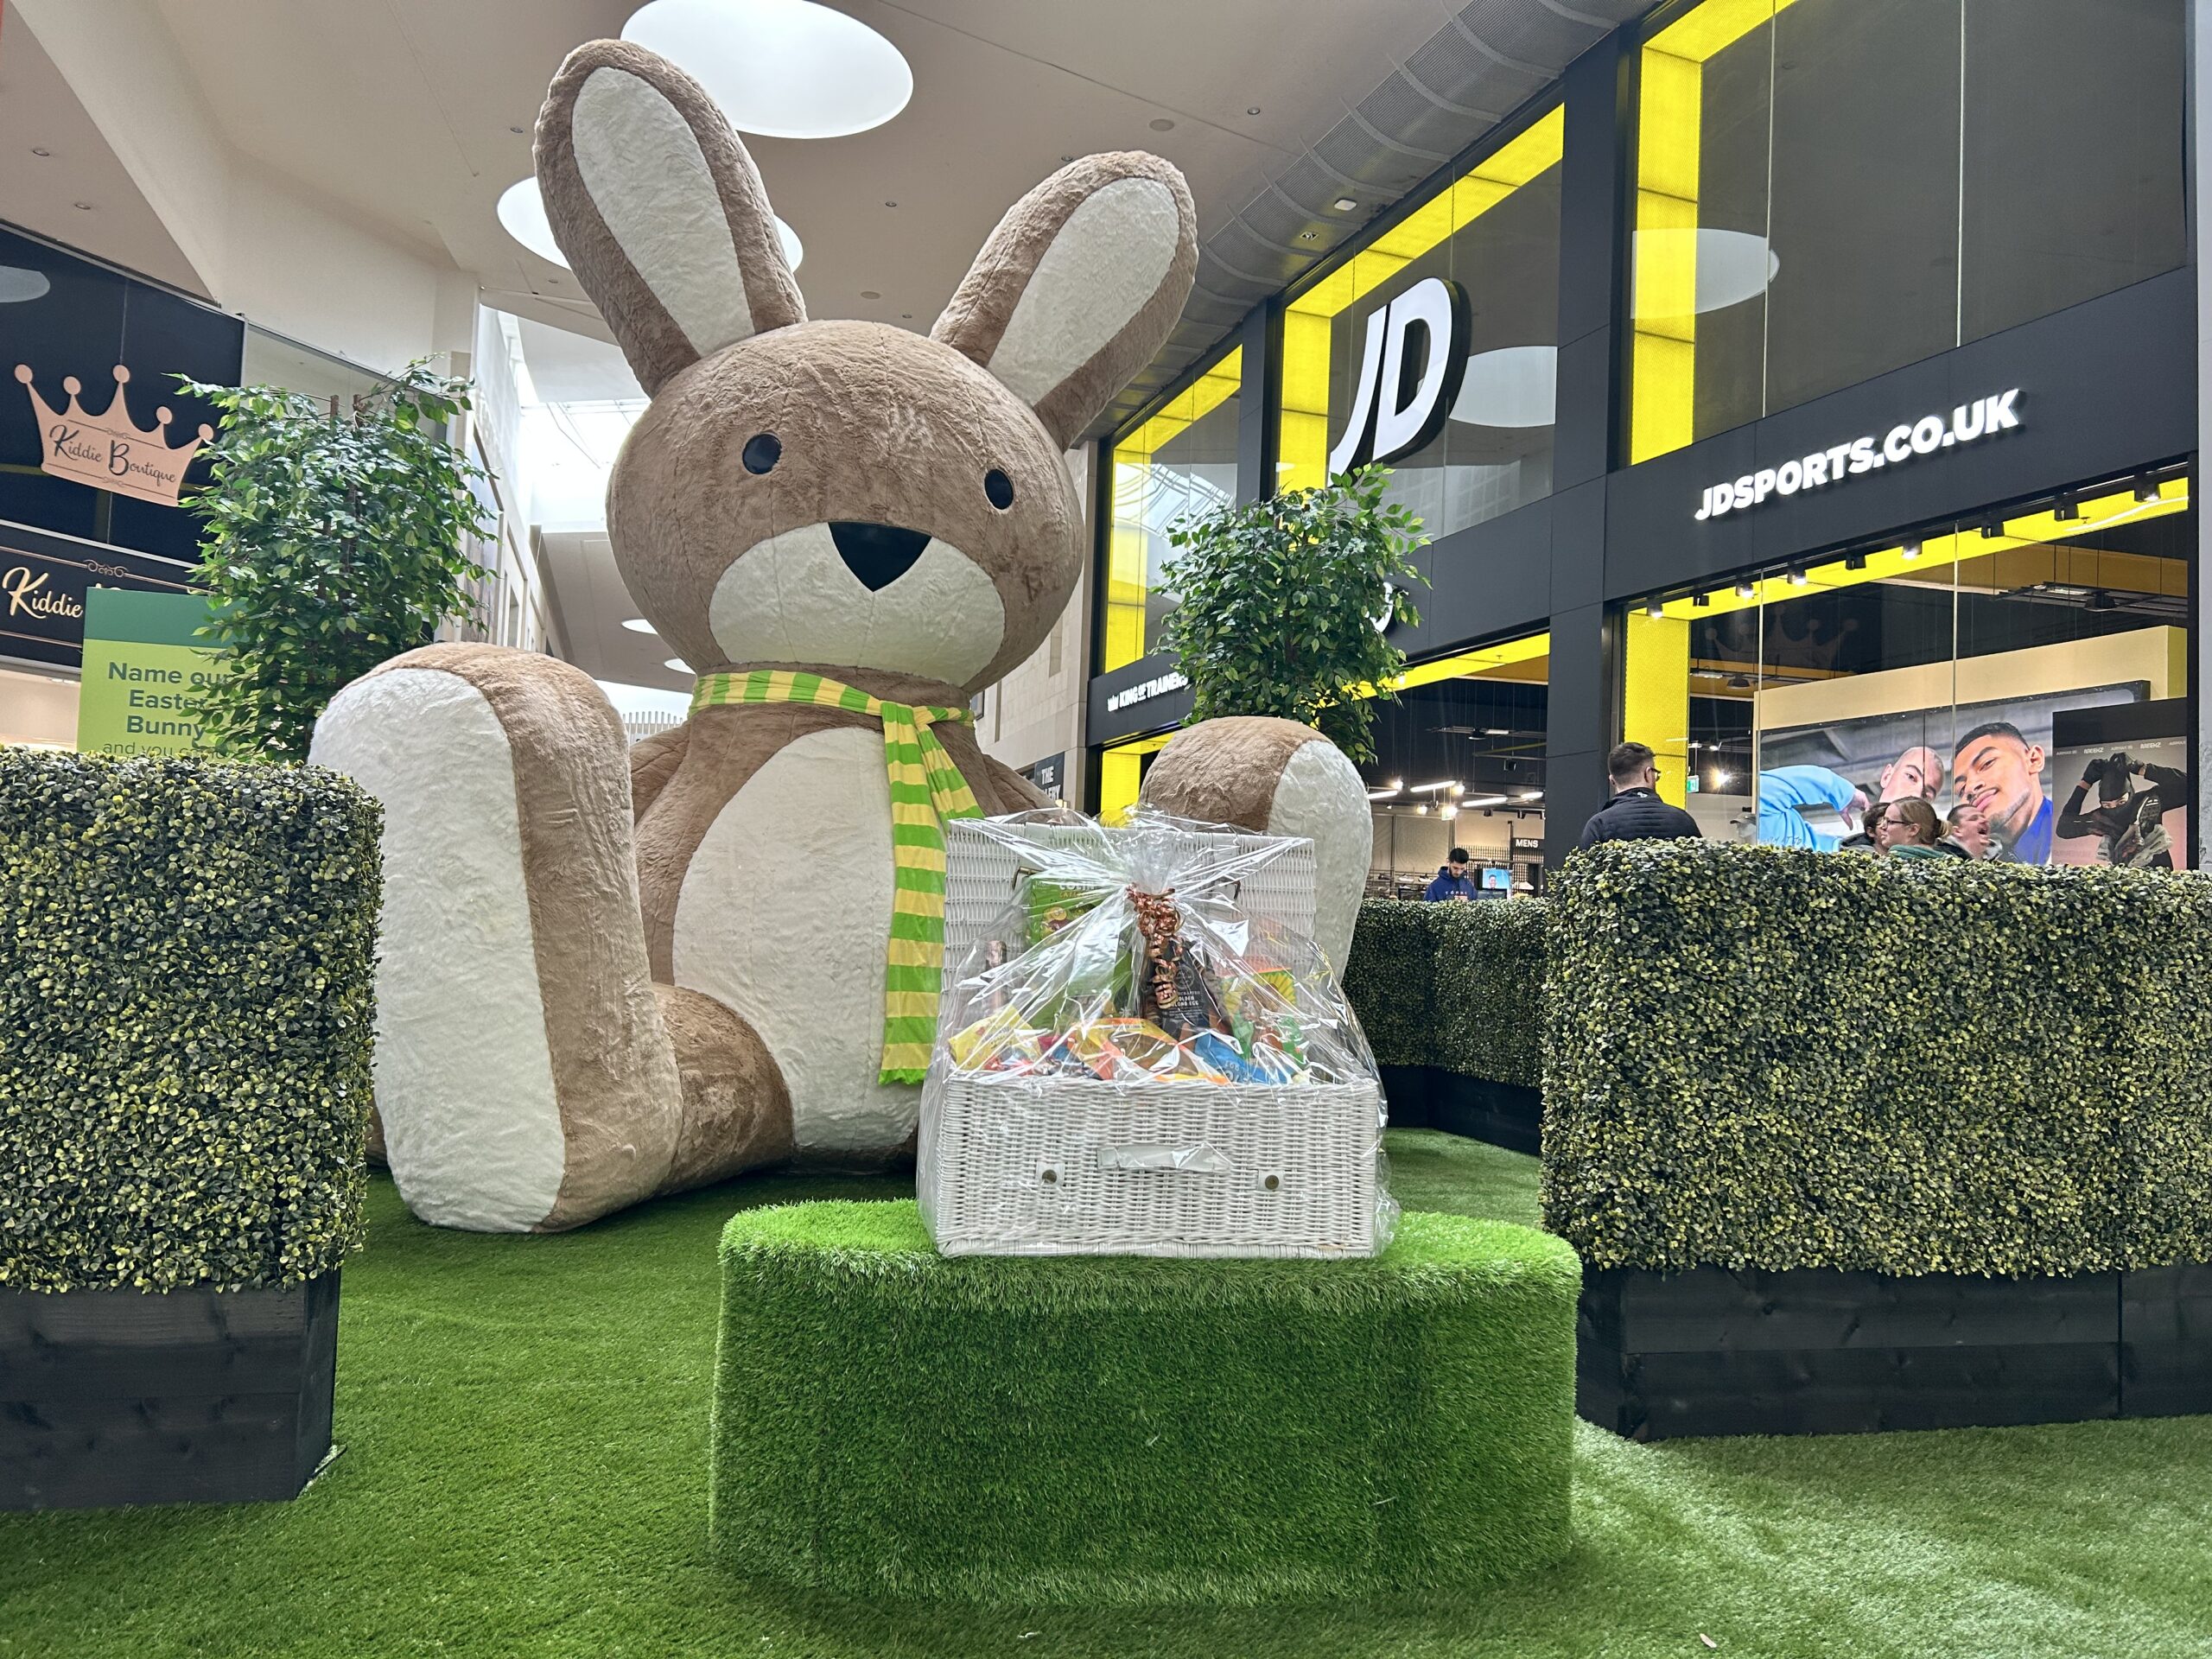 Easter at Silverburn | Silverburn Shopping Centre